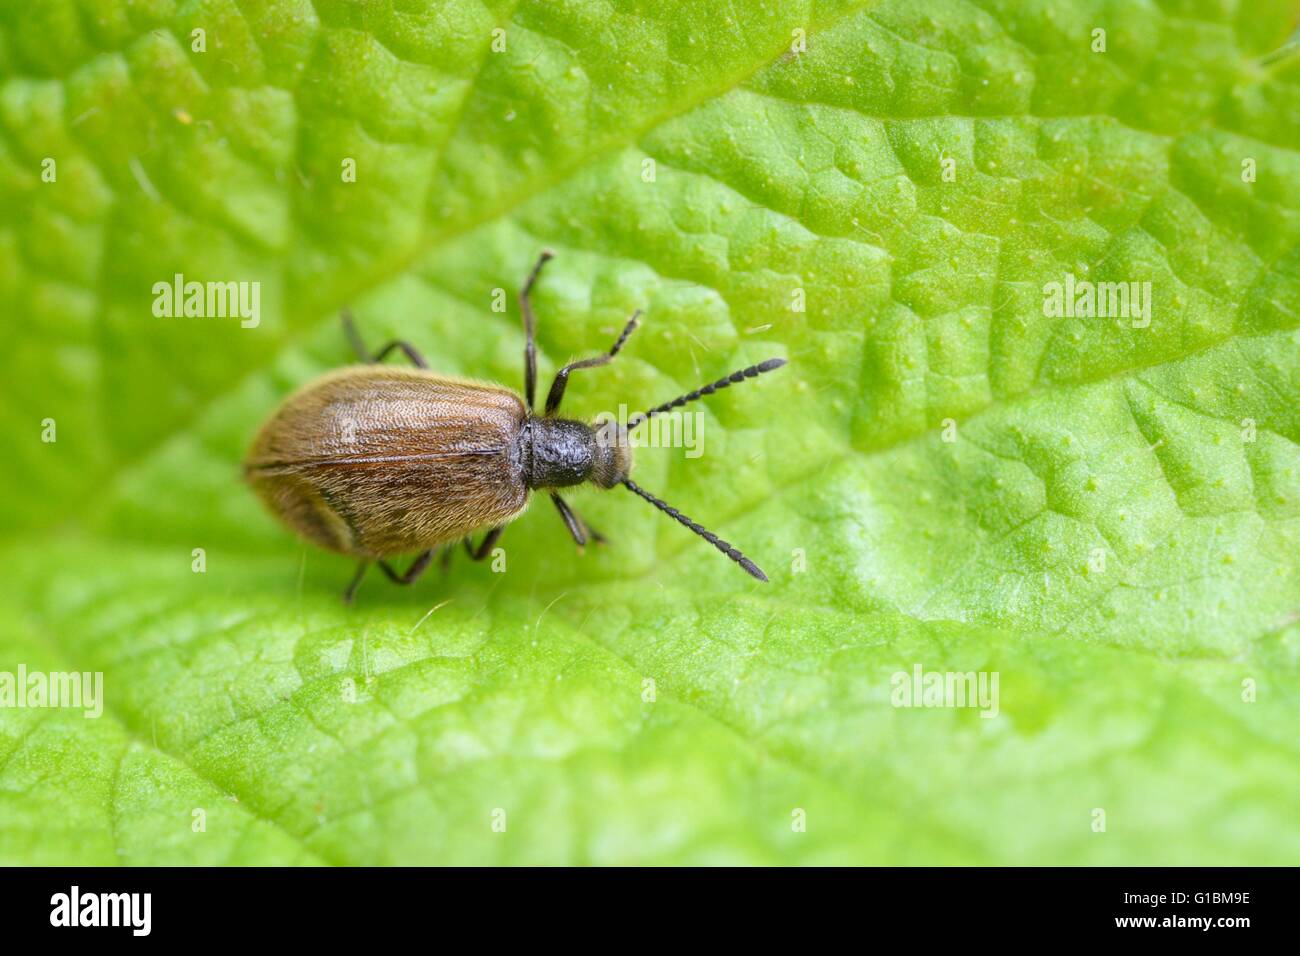 Lagria hirta beetle, Wales, UK. Stock Photo